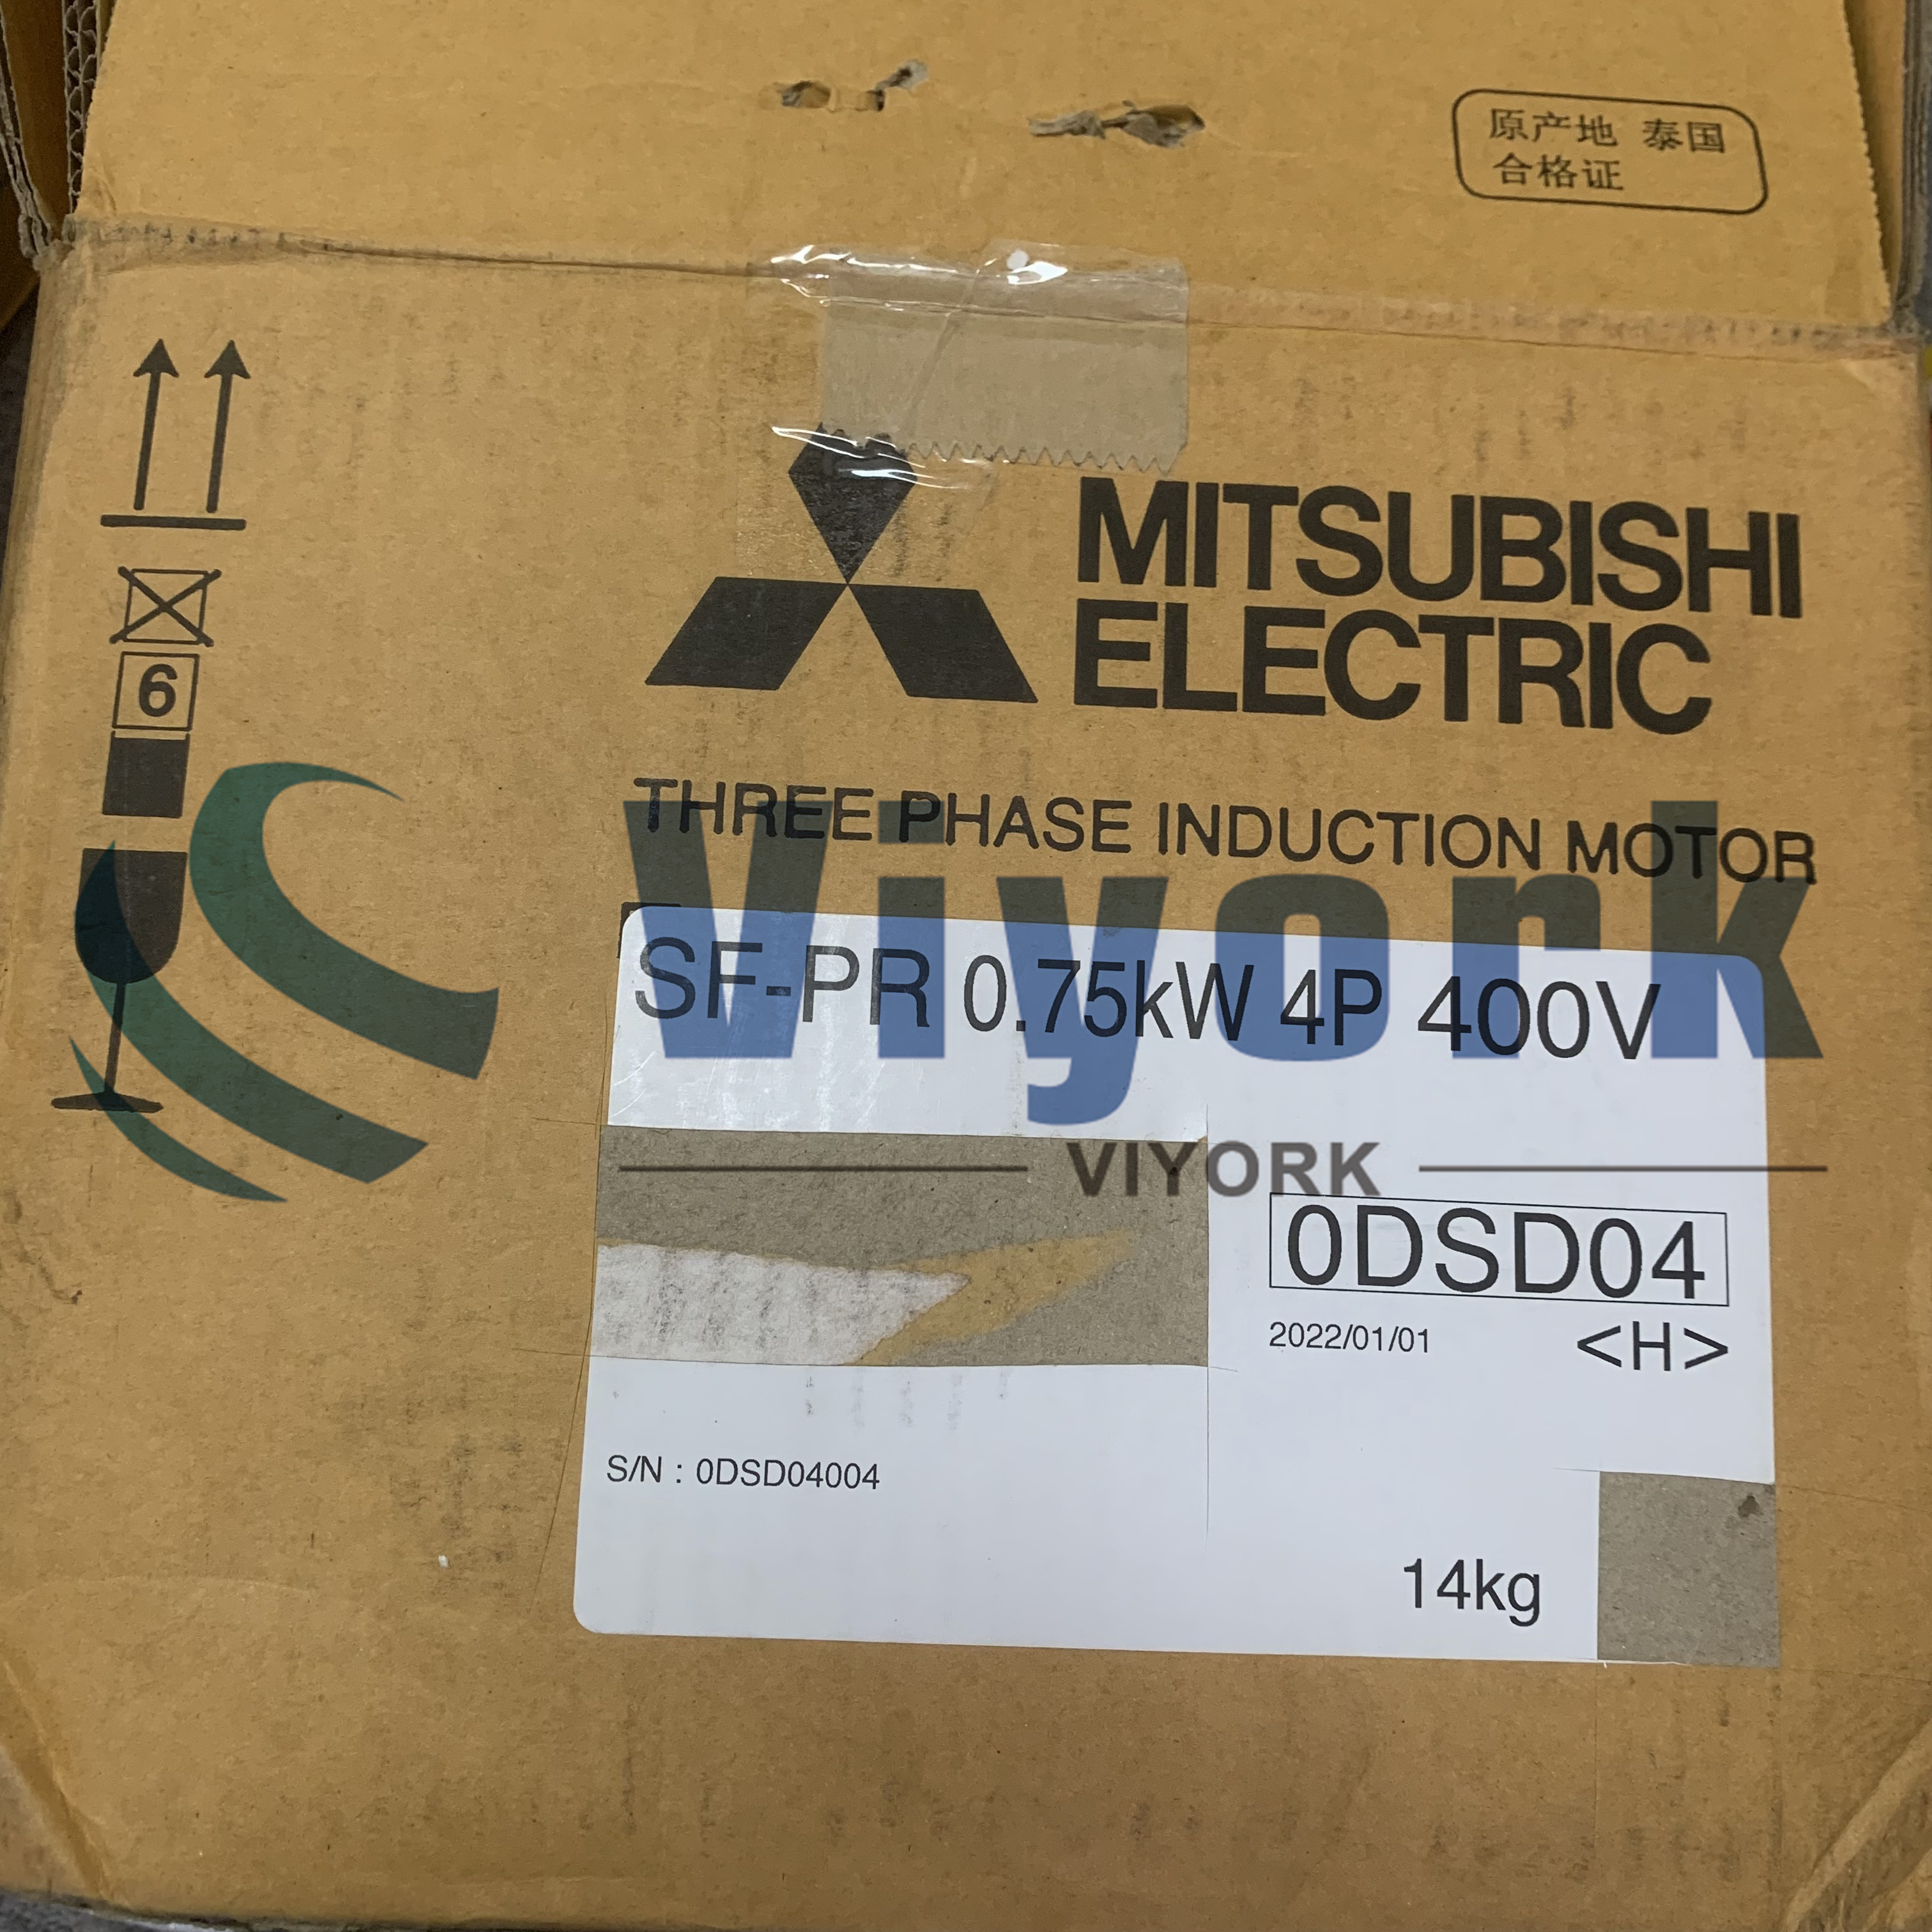 Mitsubishi SF-PR 0.75KW 4P AC220V 60HZ MOTOR NEW